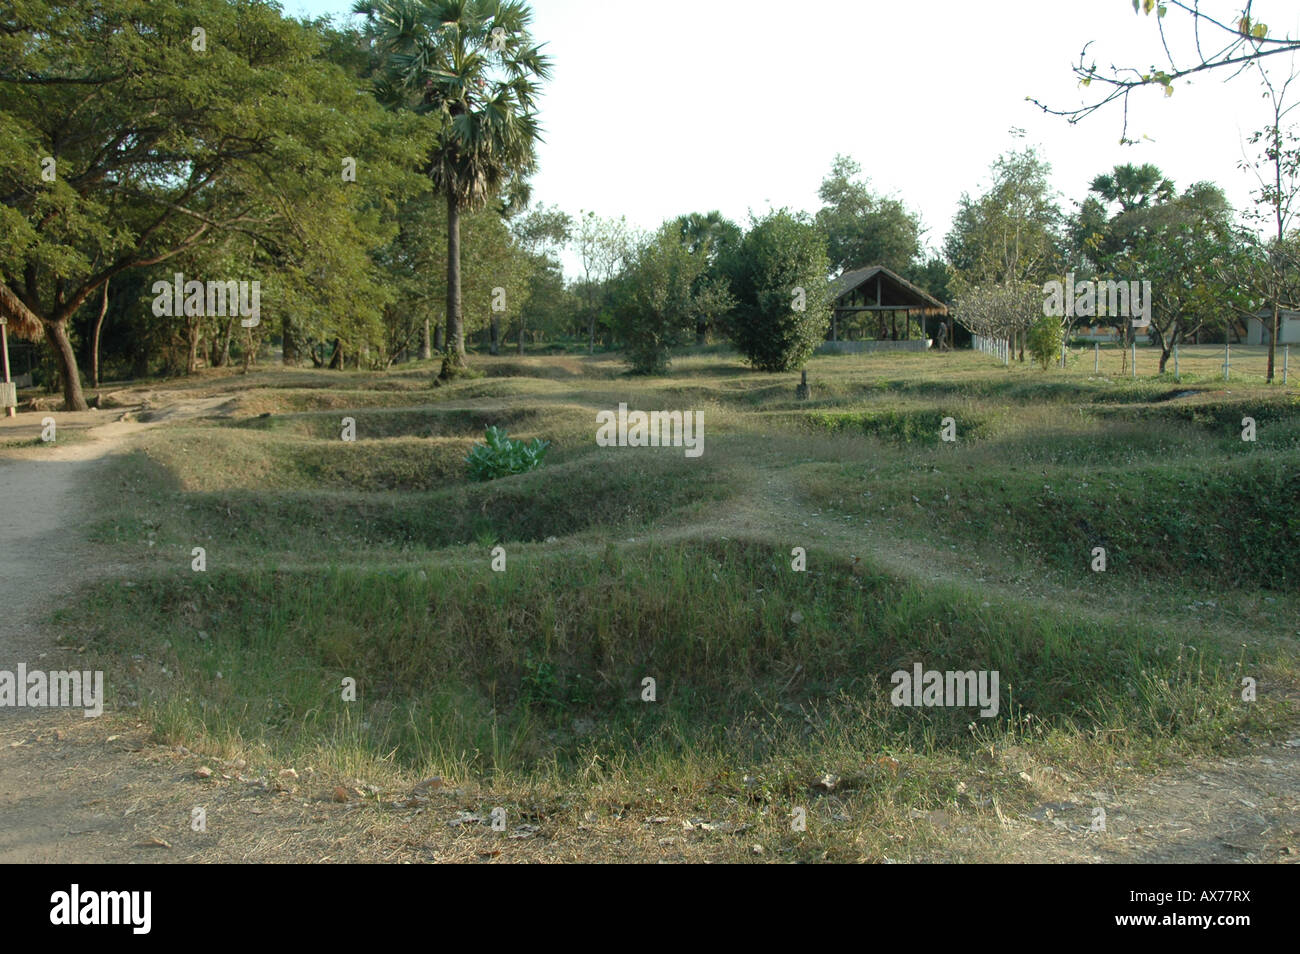 Excavated mass graves at The Killing Fields, Choeung Ek, Nrar Phnom Penh, Cambodia. Stock Photo